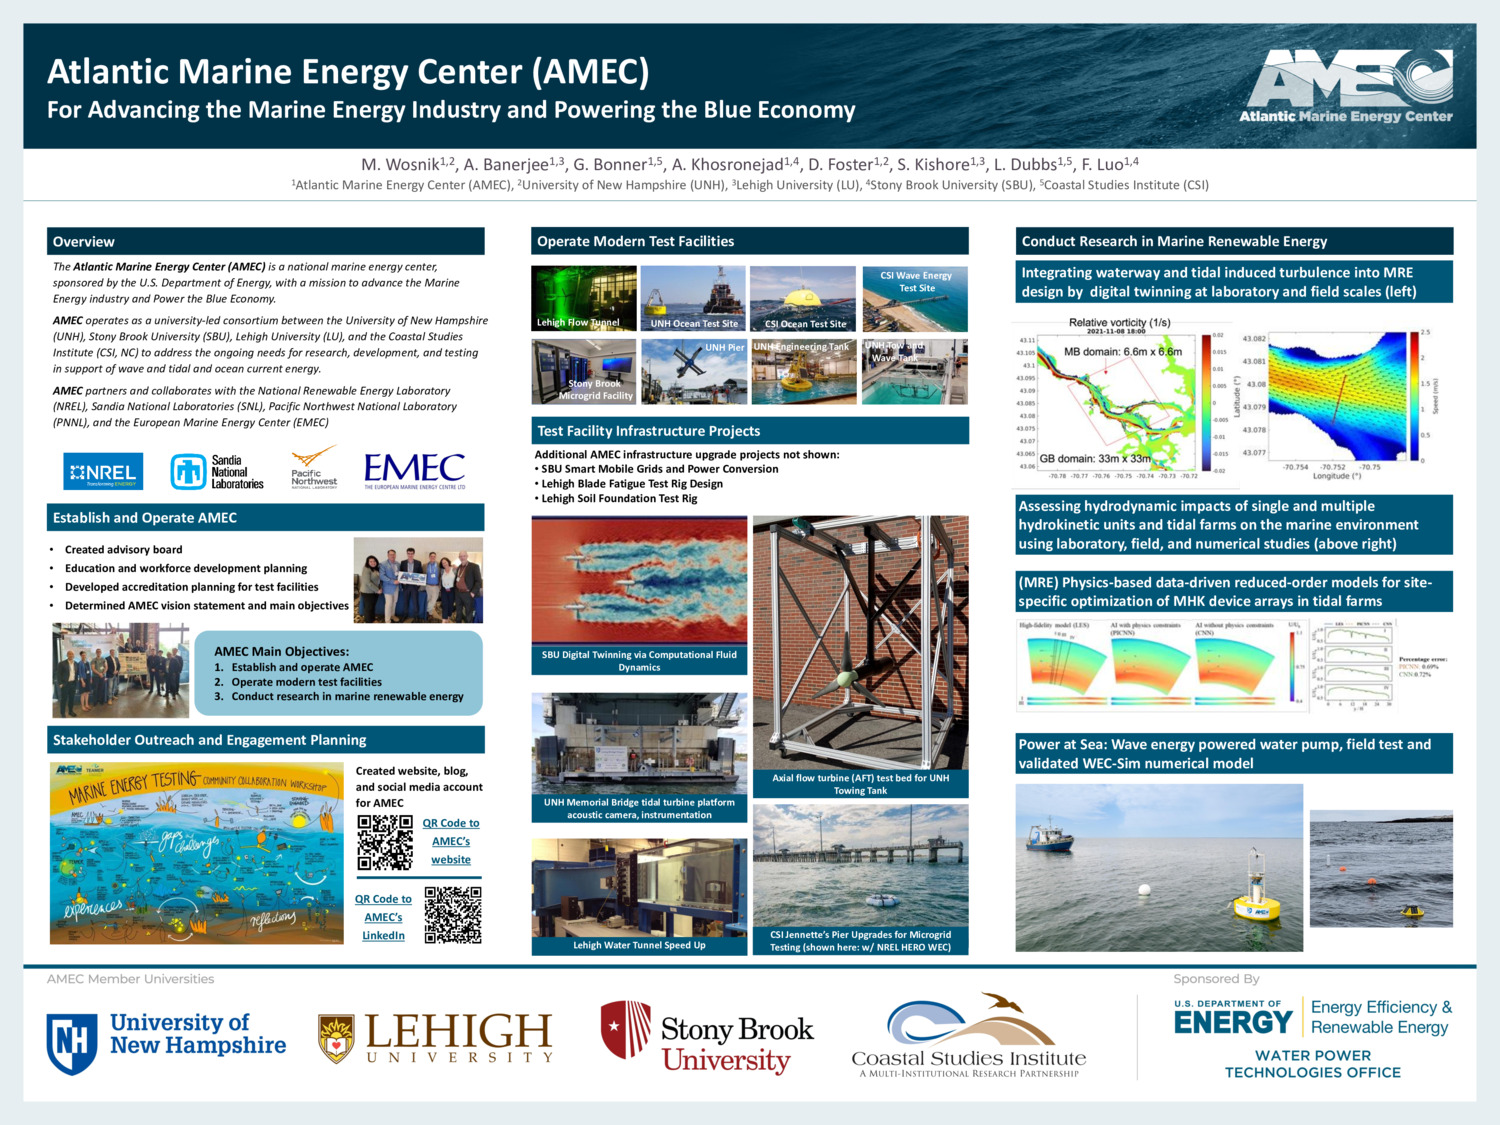 Atlantic Marine Energy Center (Amec) by ccz359